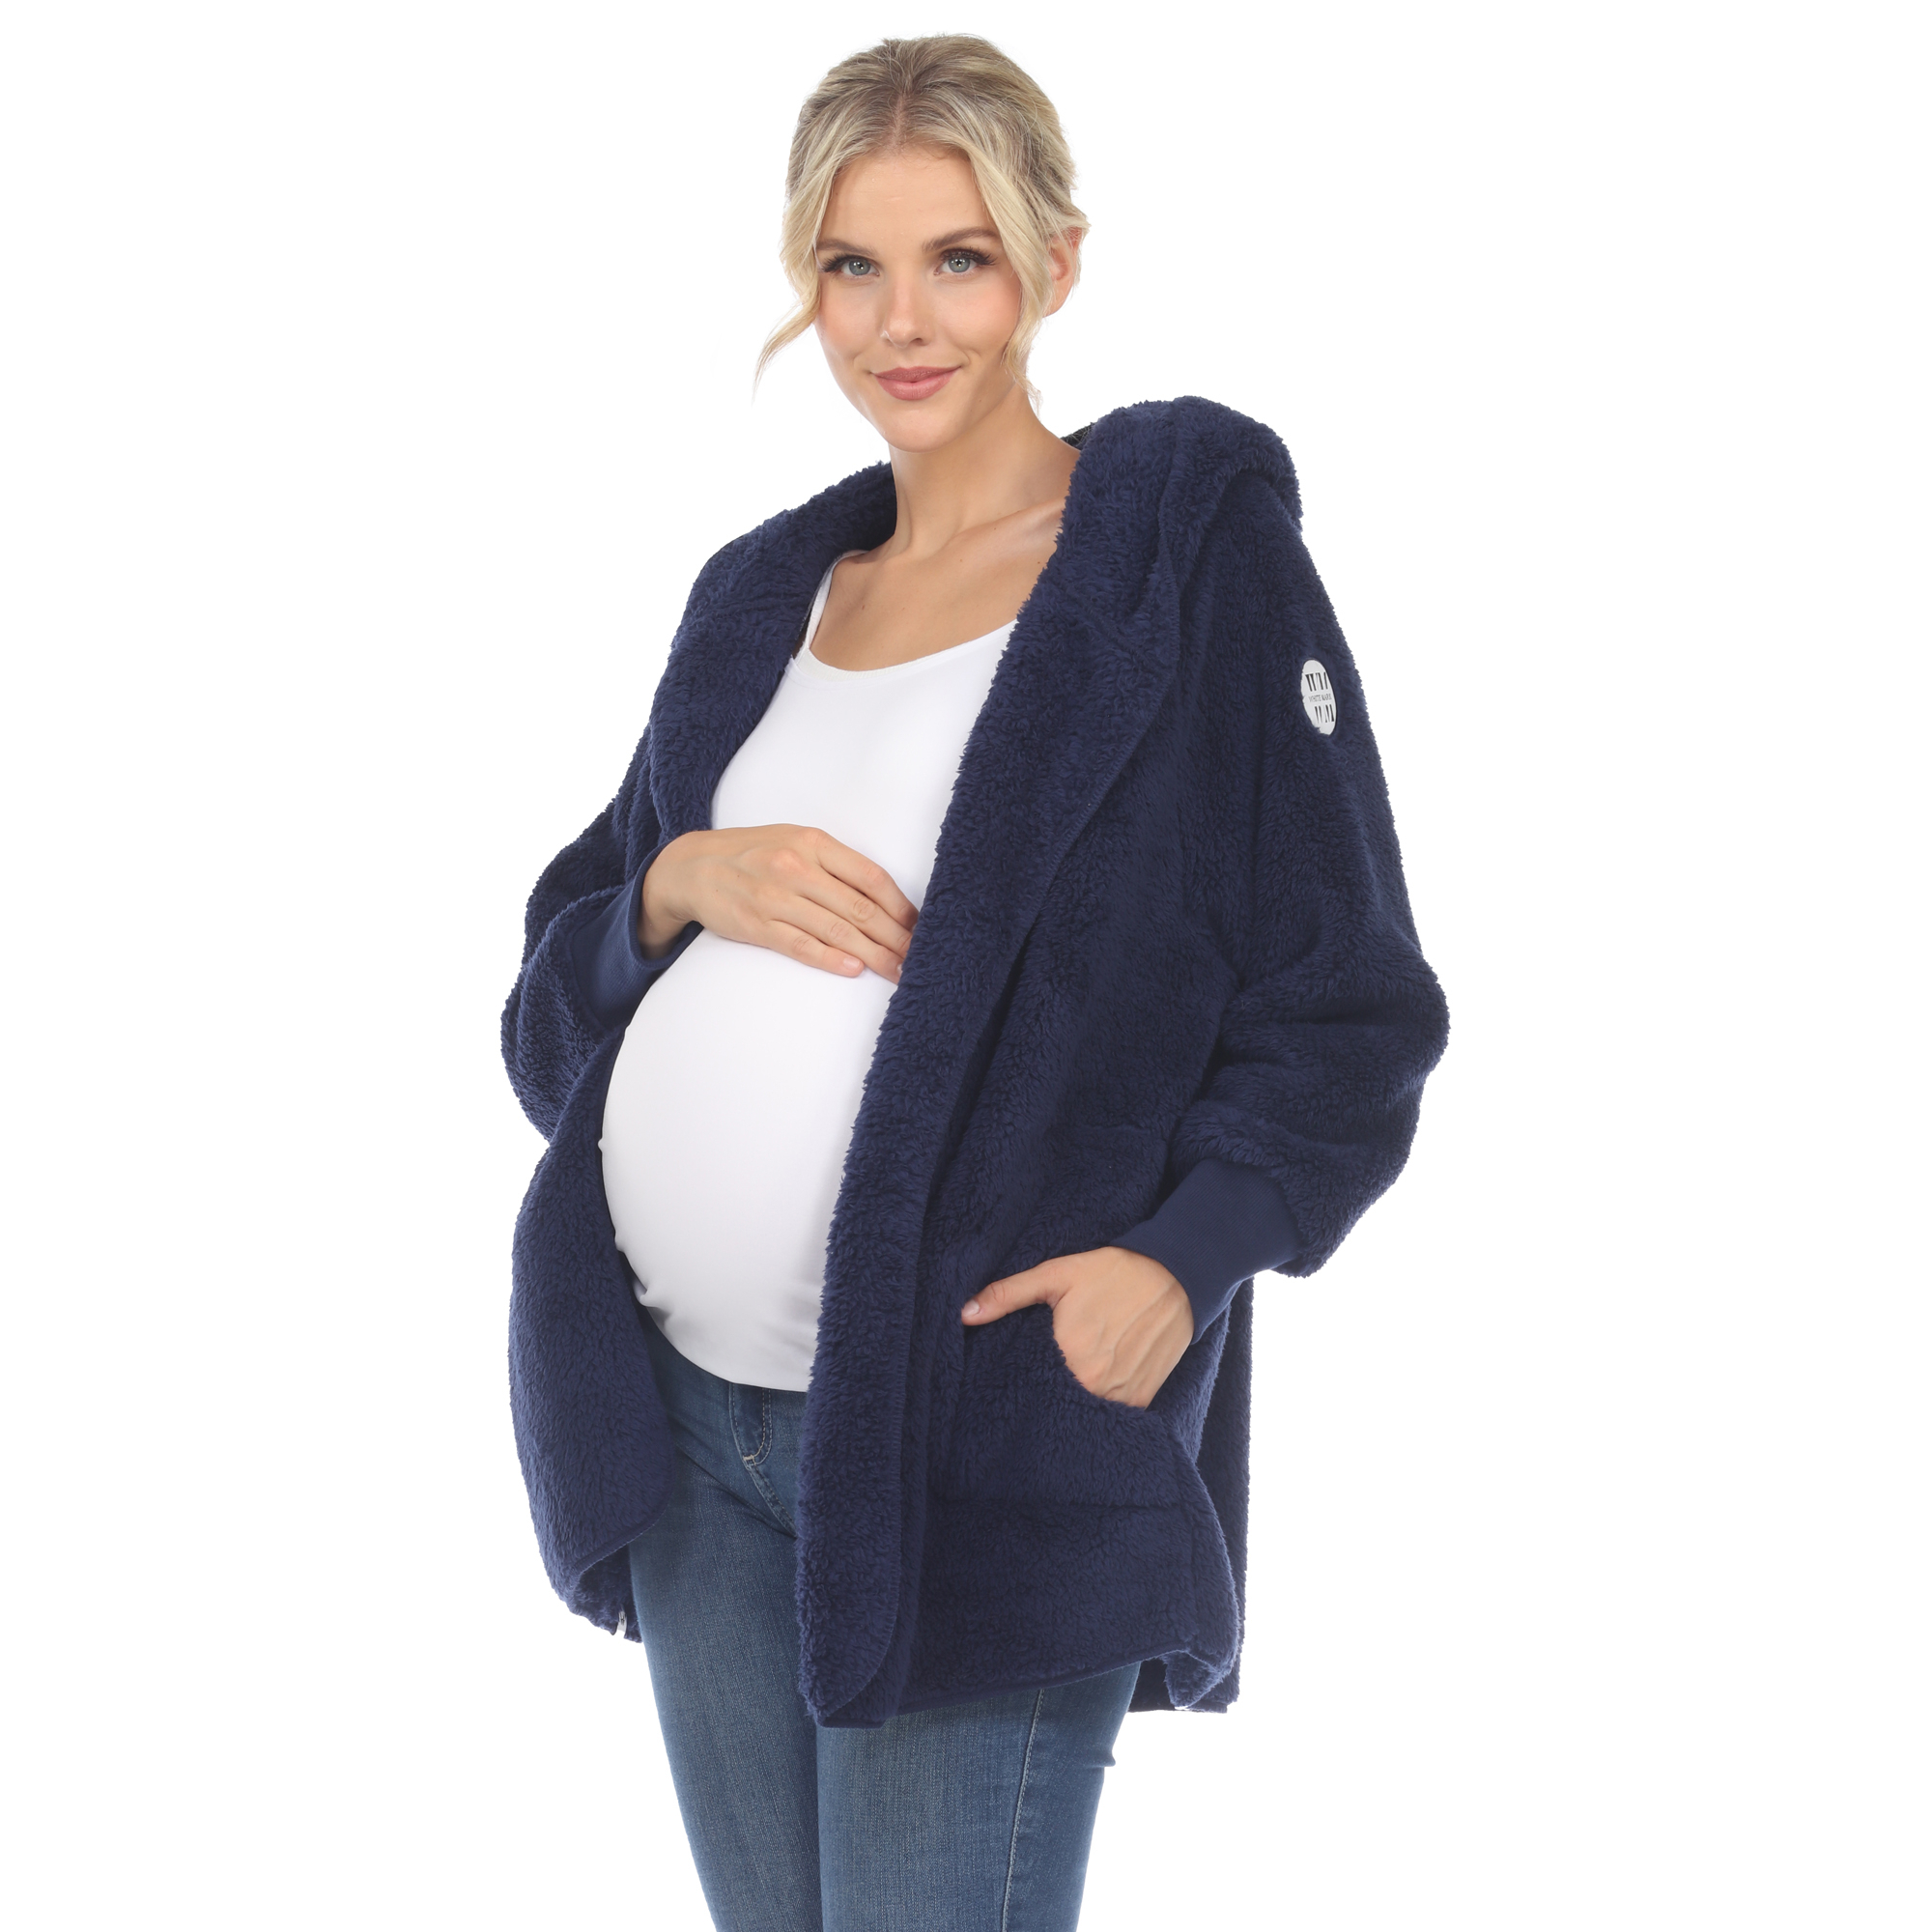 White Mark Womenâs Maternity Plush Hooded Cardigan With Pockets - Grey, L/XL